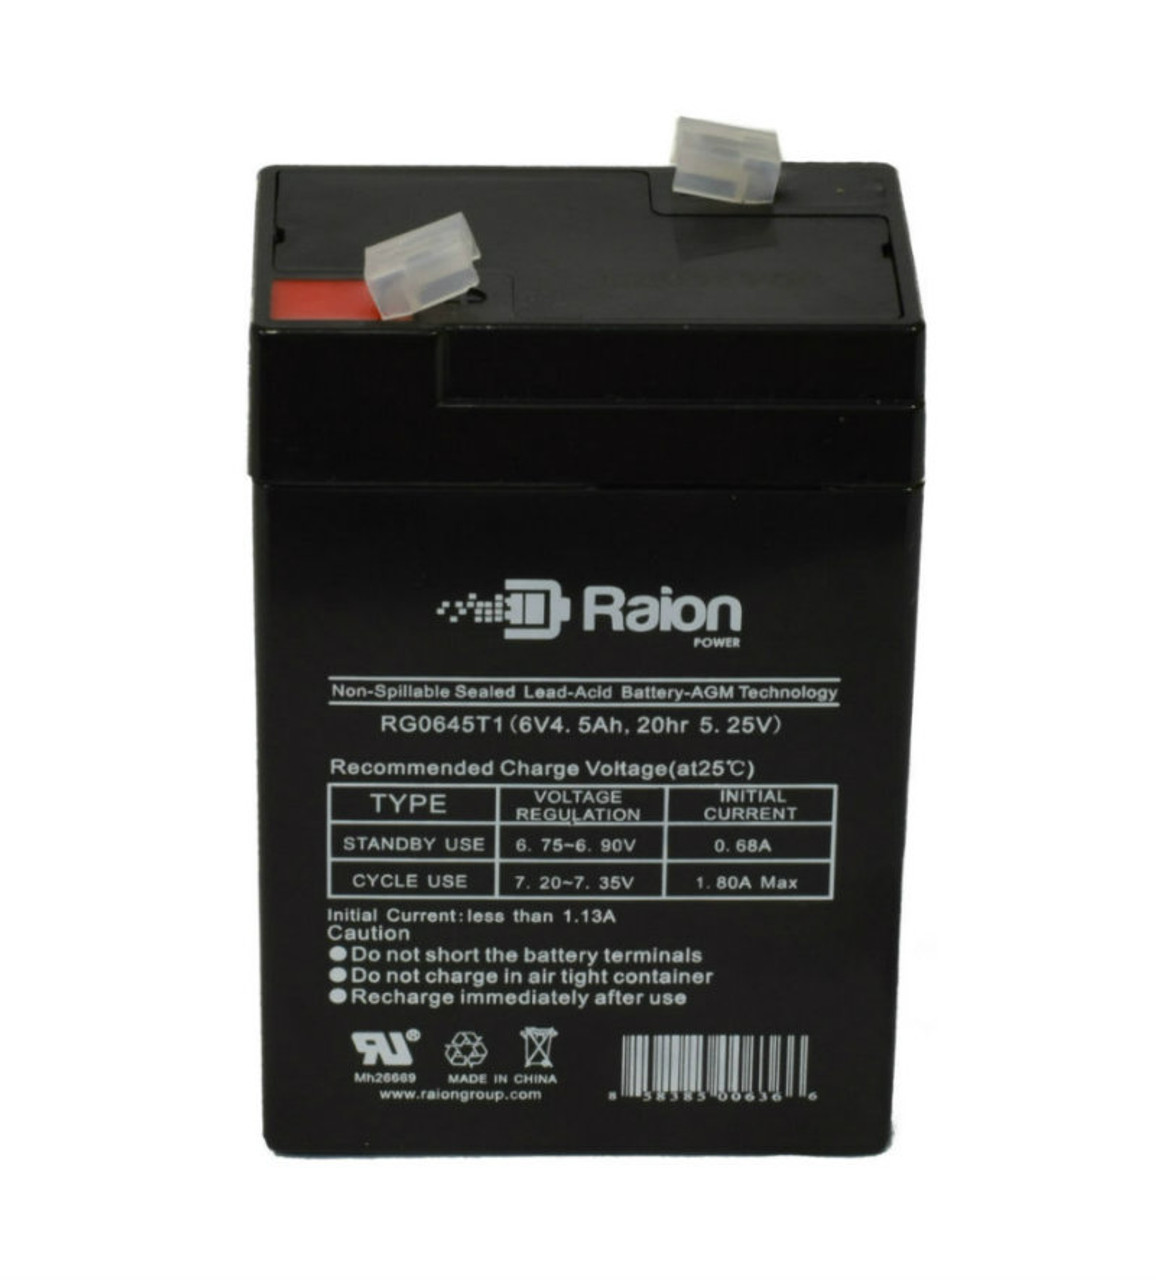 Raion Power RG0645T1 Replacement Battery Cartridge for Rhino SLA 4-6